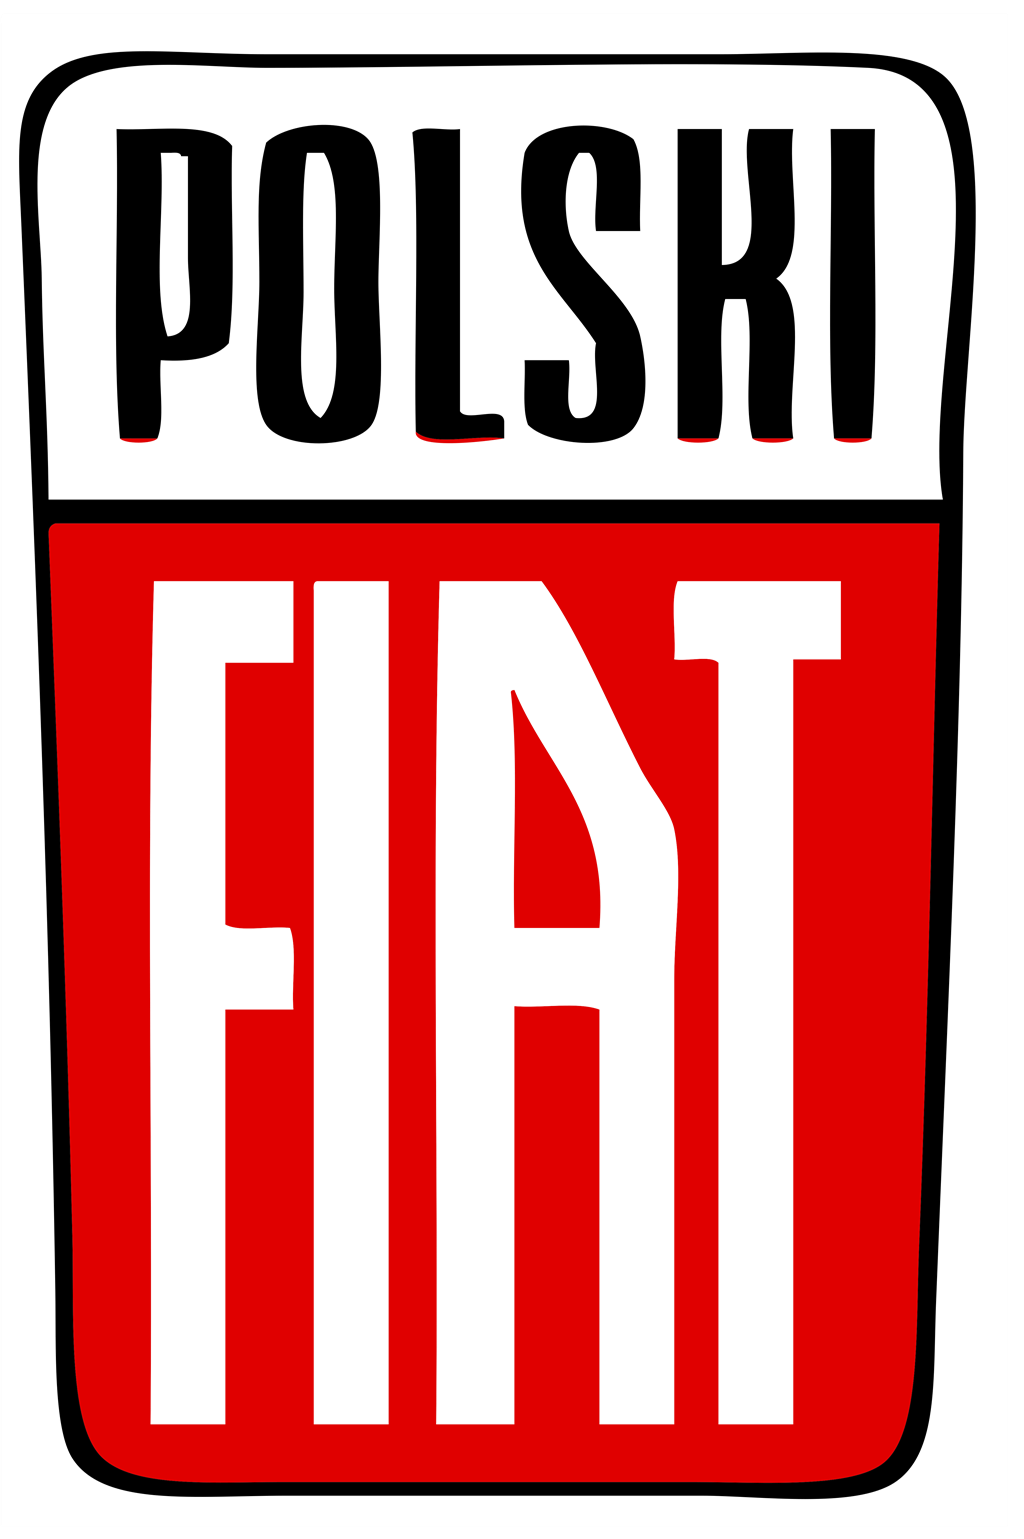 Polski Fiat logotype, transparent .png, medium, large